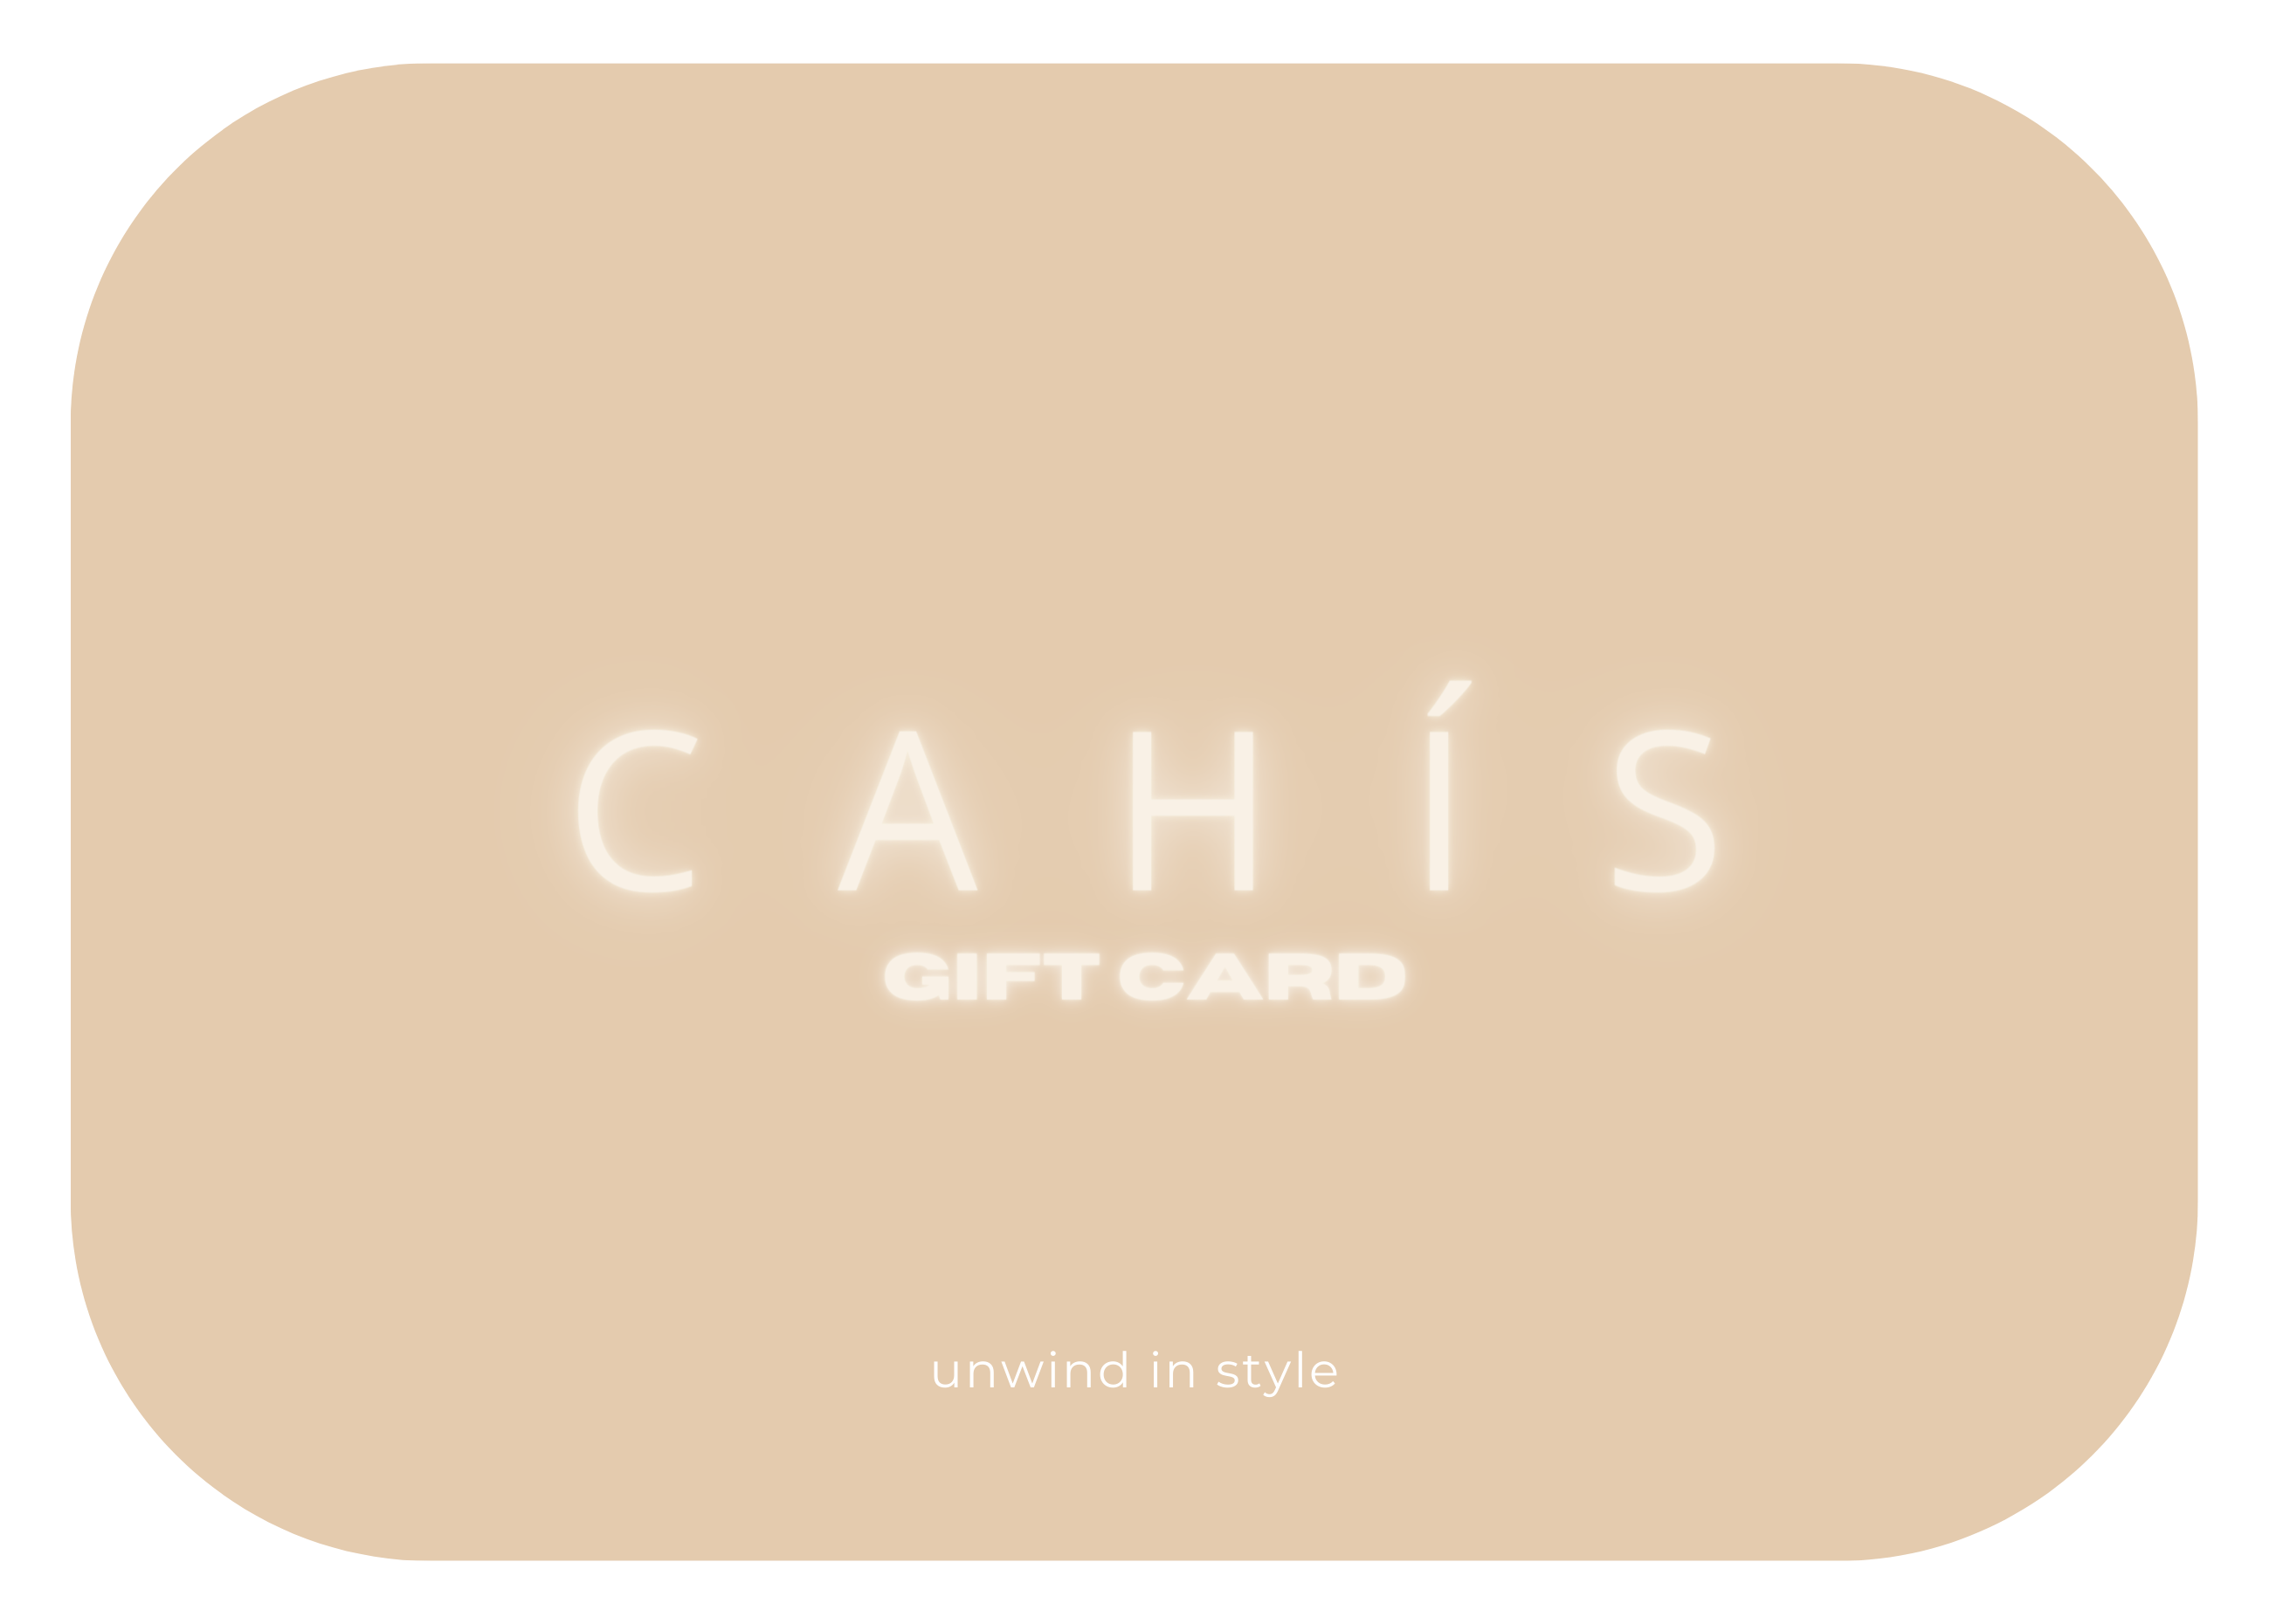 Cahis Gift Card